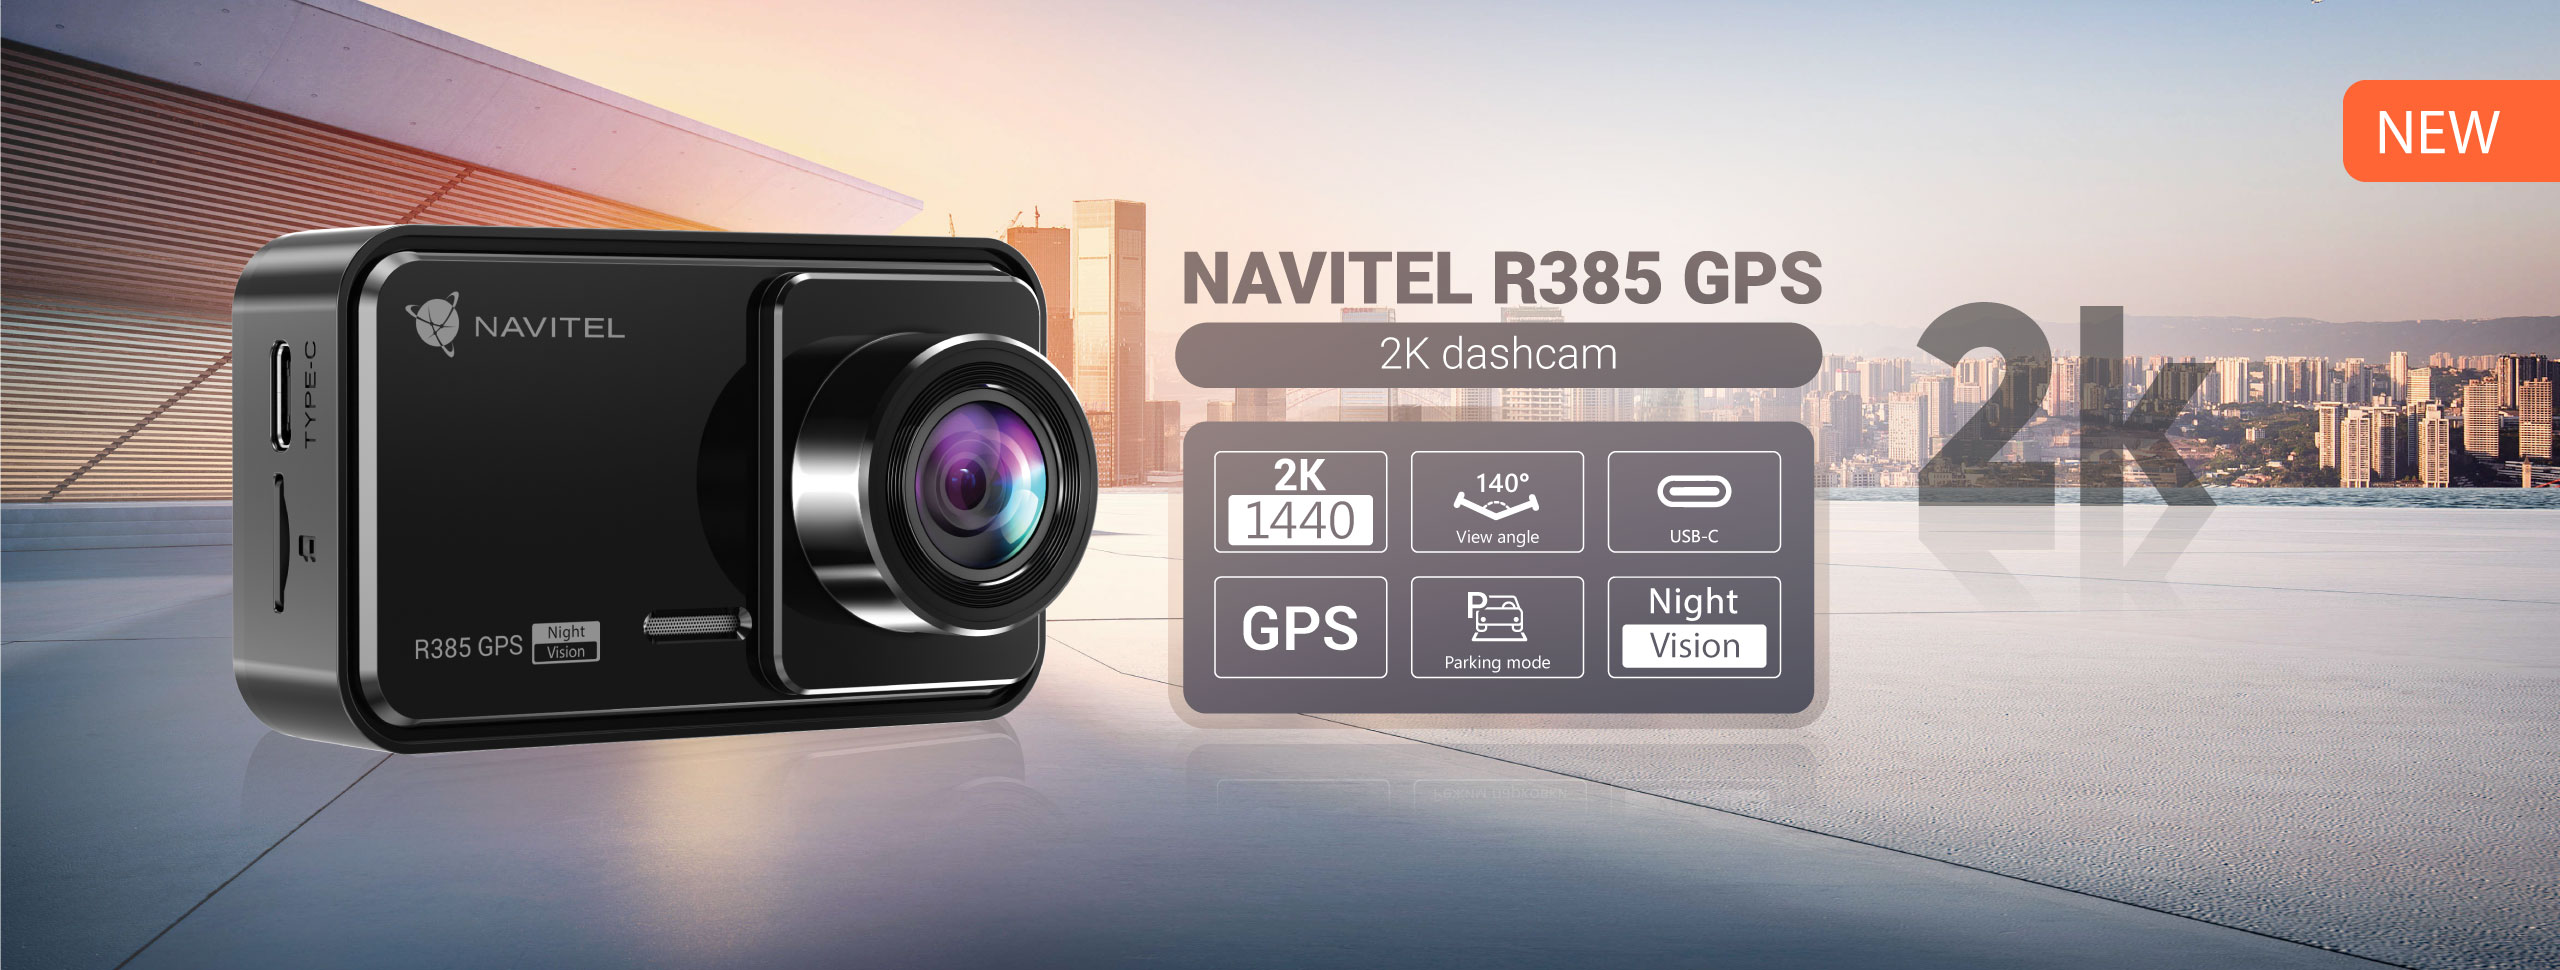 New NAVITEL R385 GPS is now in stock!